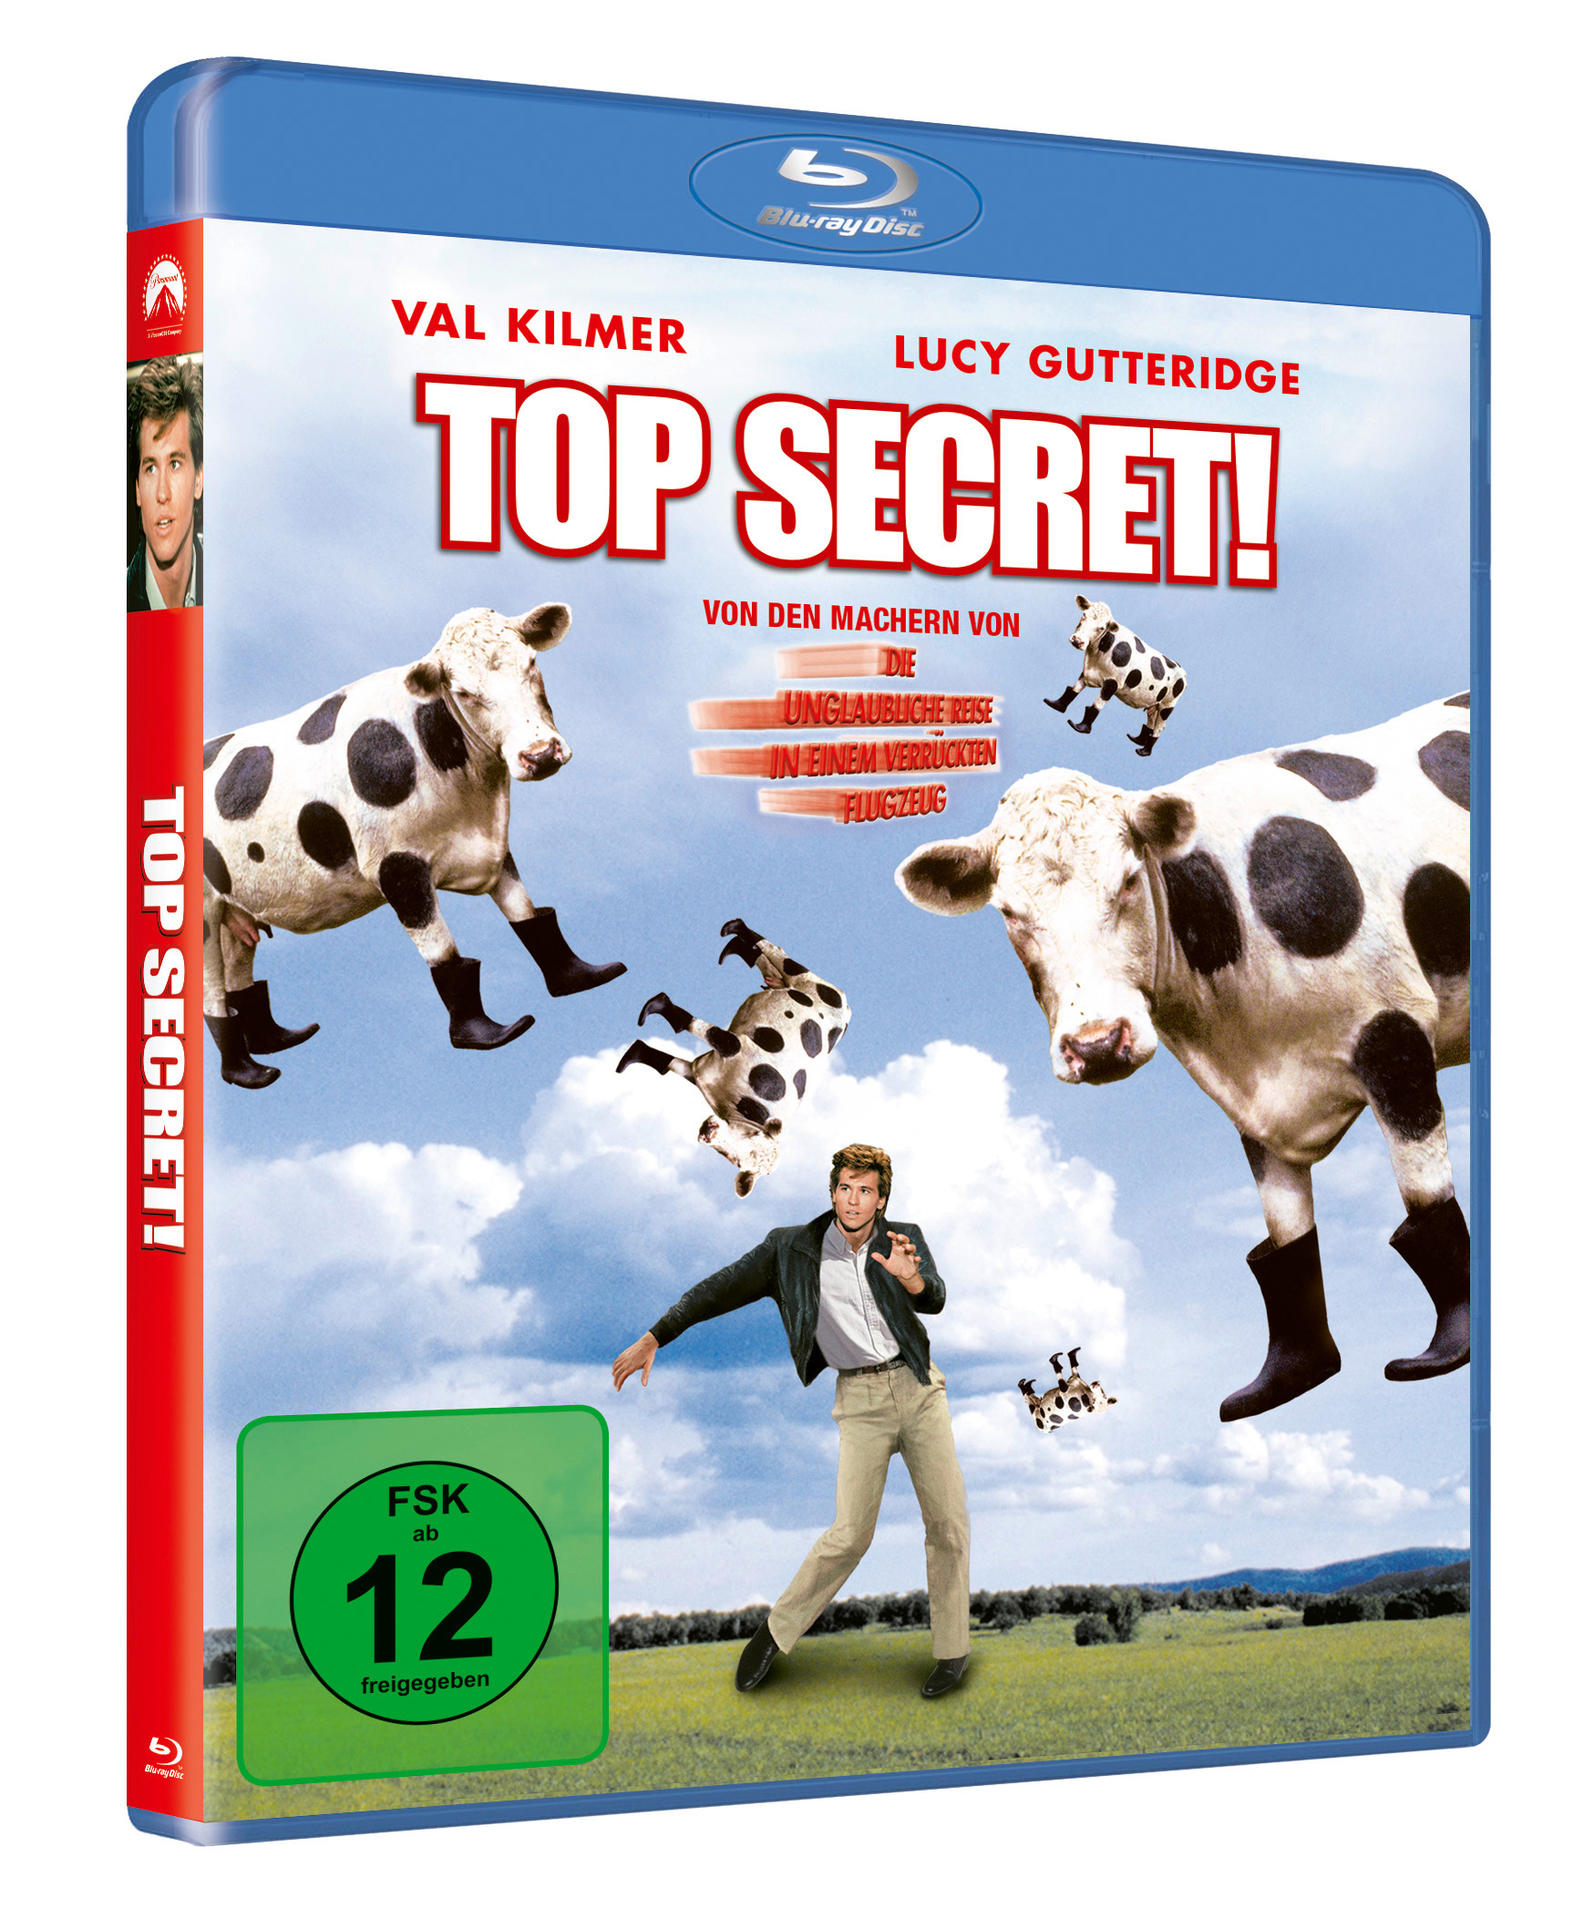 Blu-ray Secret! Top